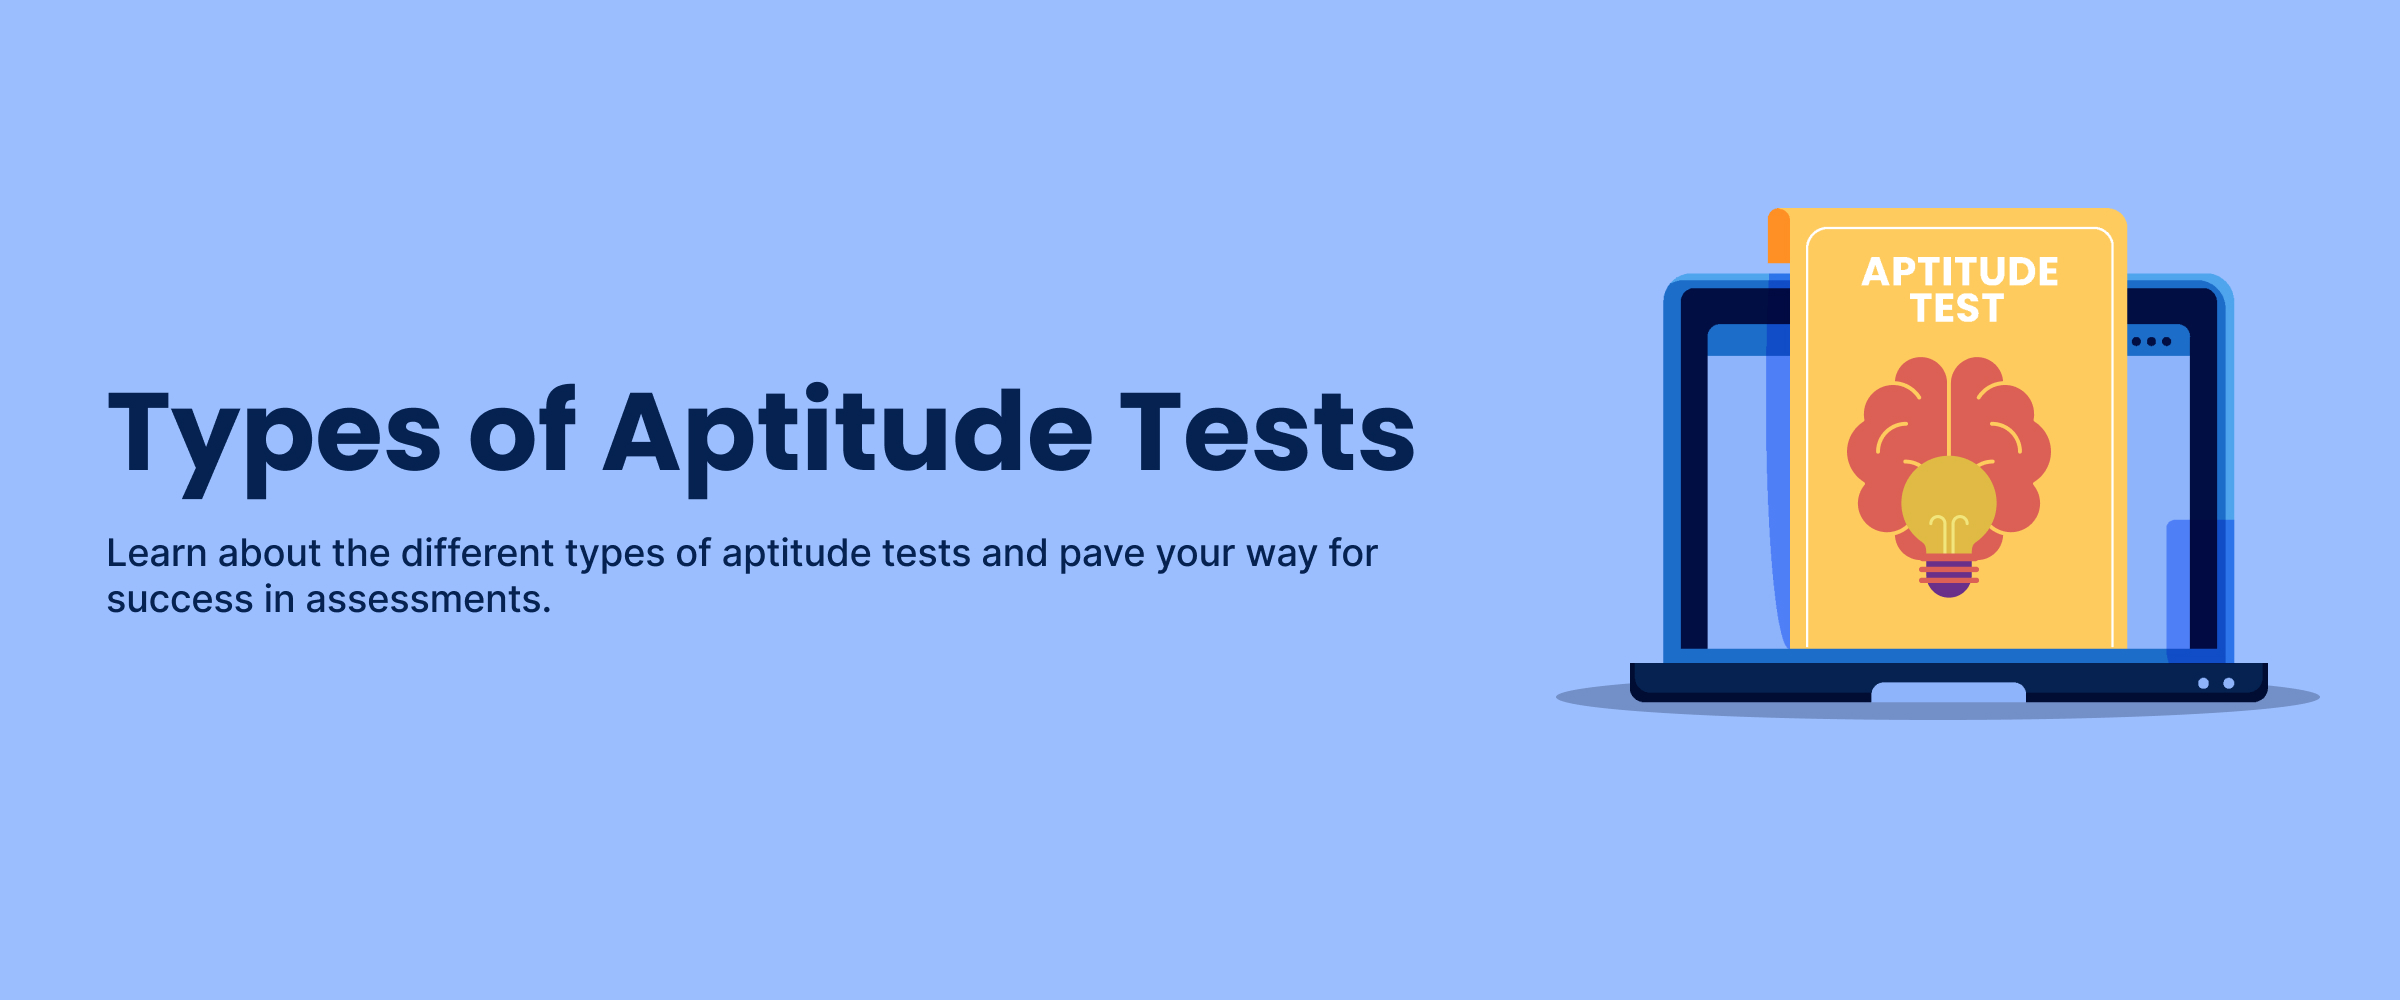 Types of Aptitude Tests